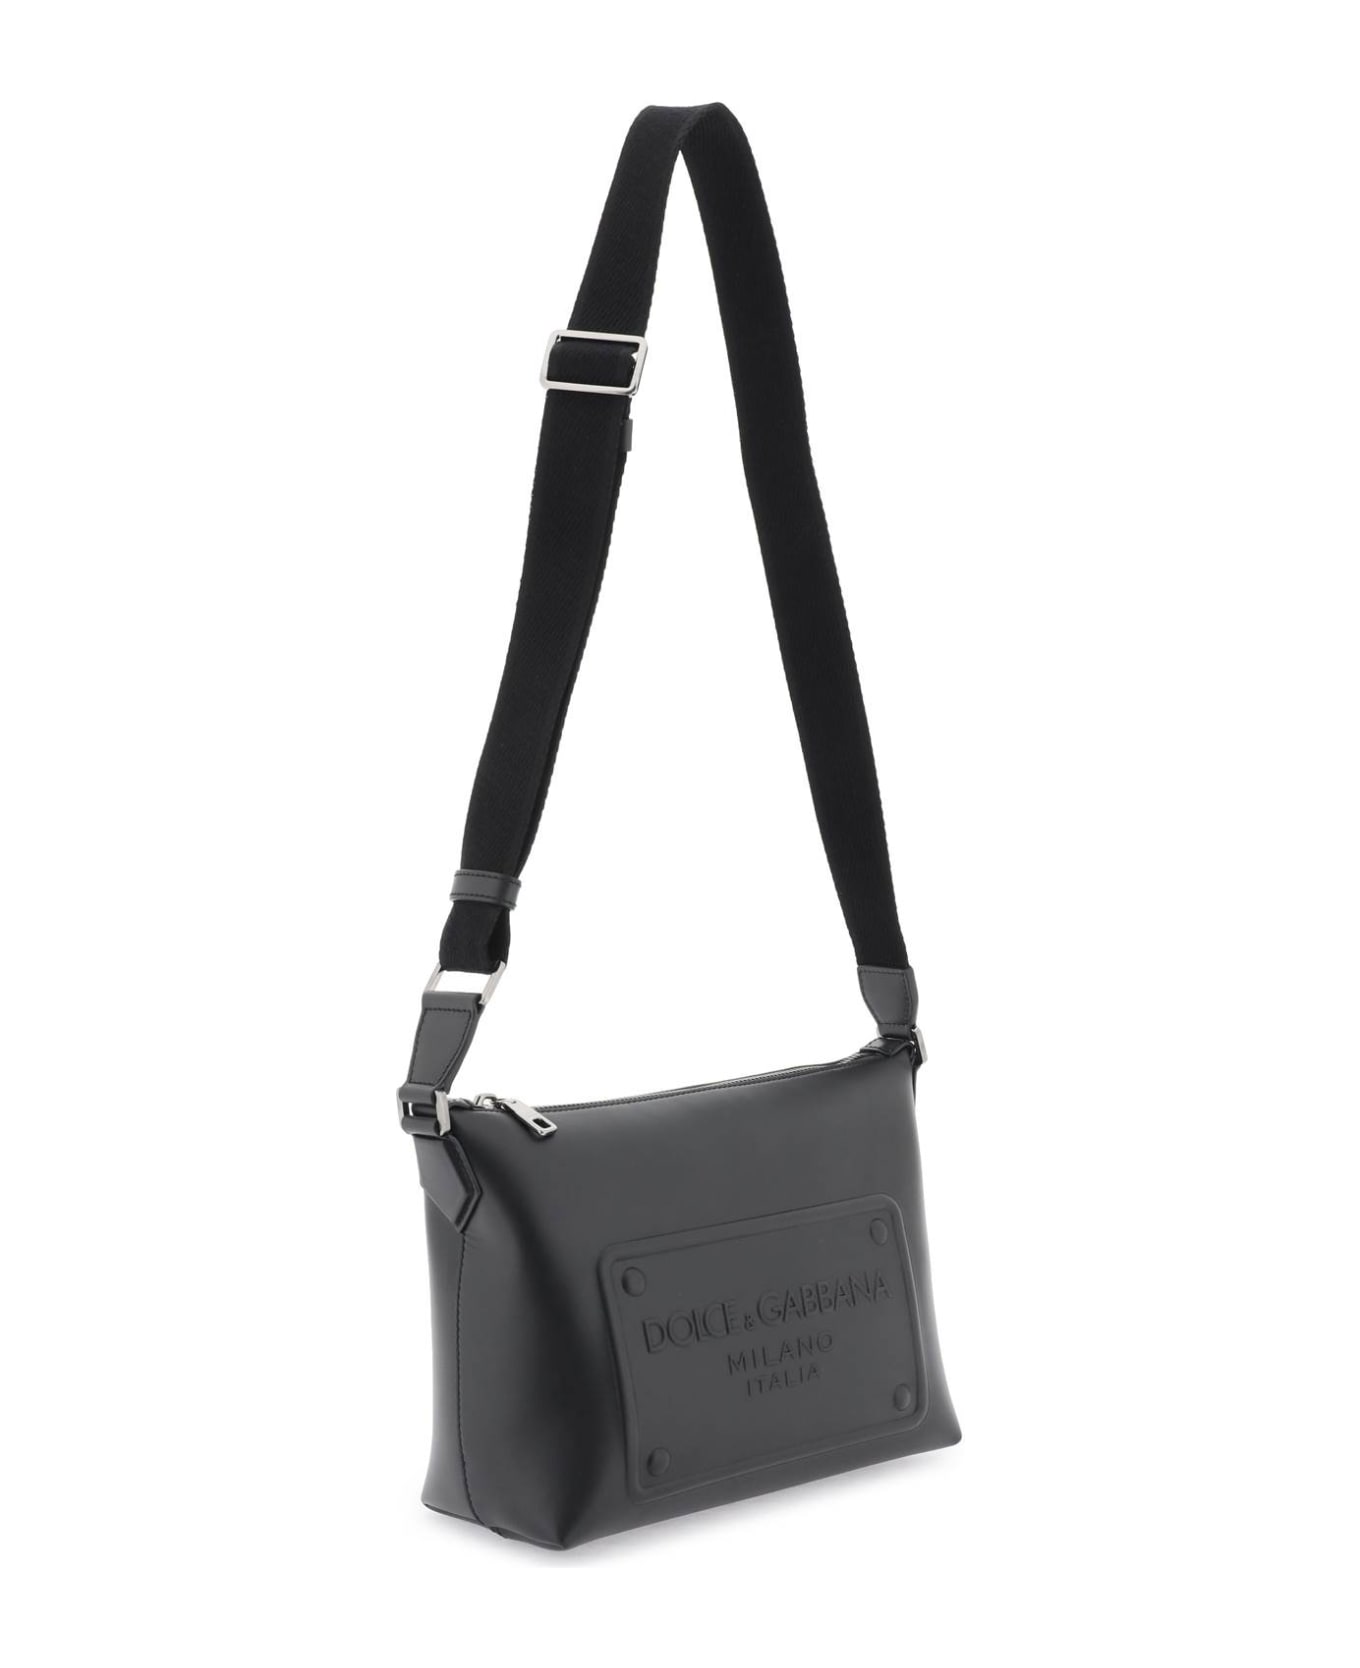 Dolce & Gabbana Leather Crossbody Bag With Debossed Logo - NERO (Black)